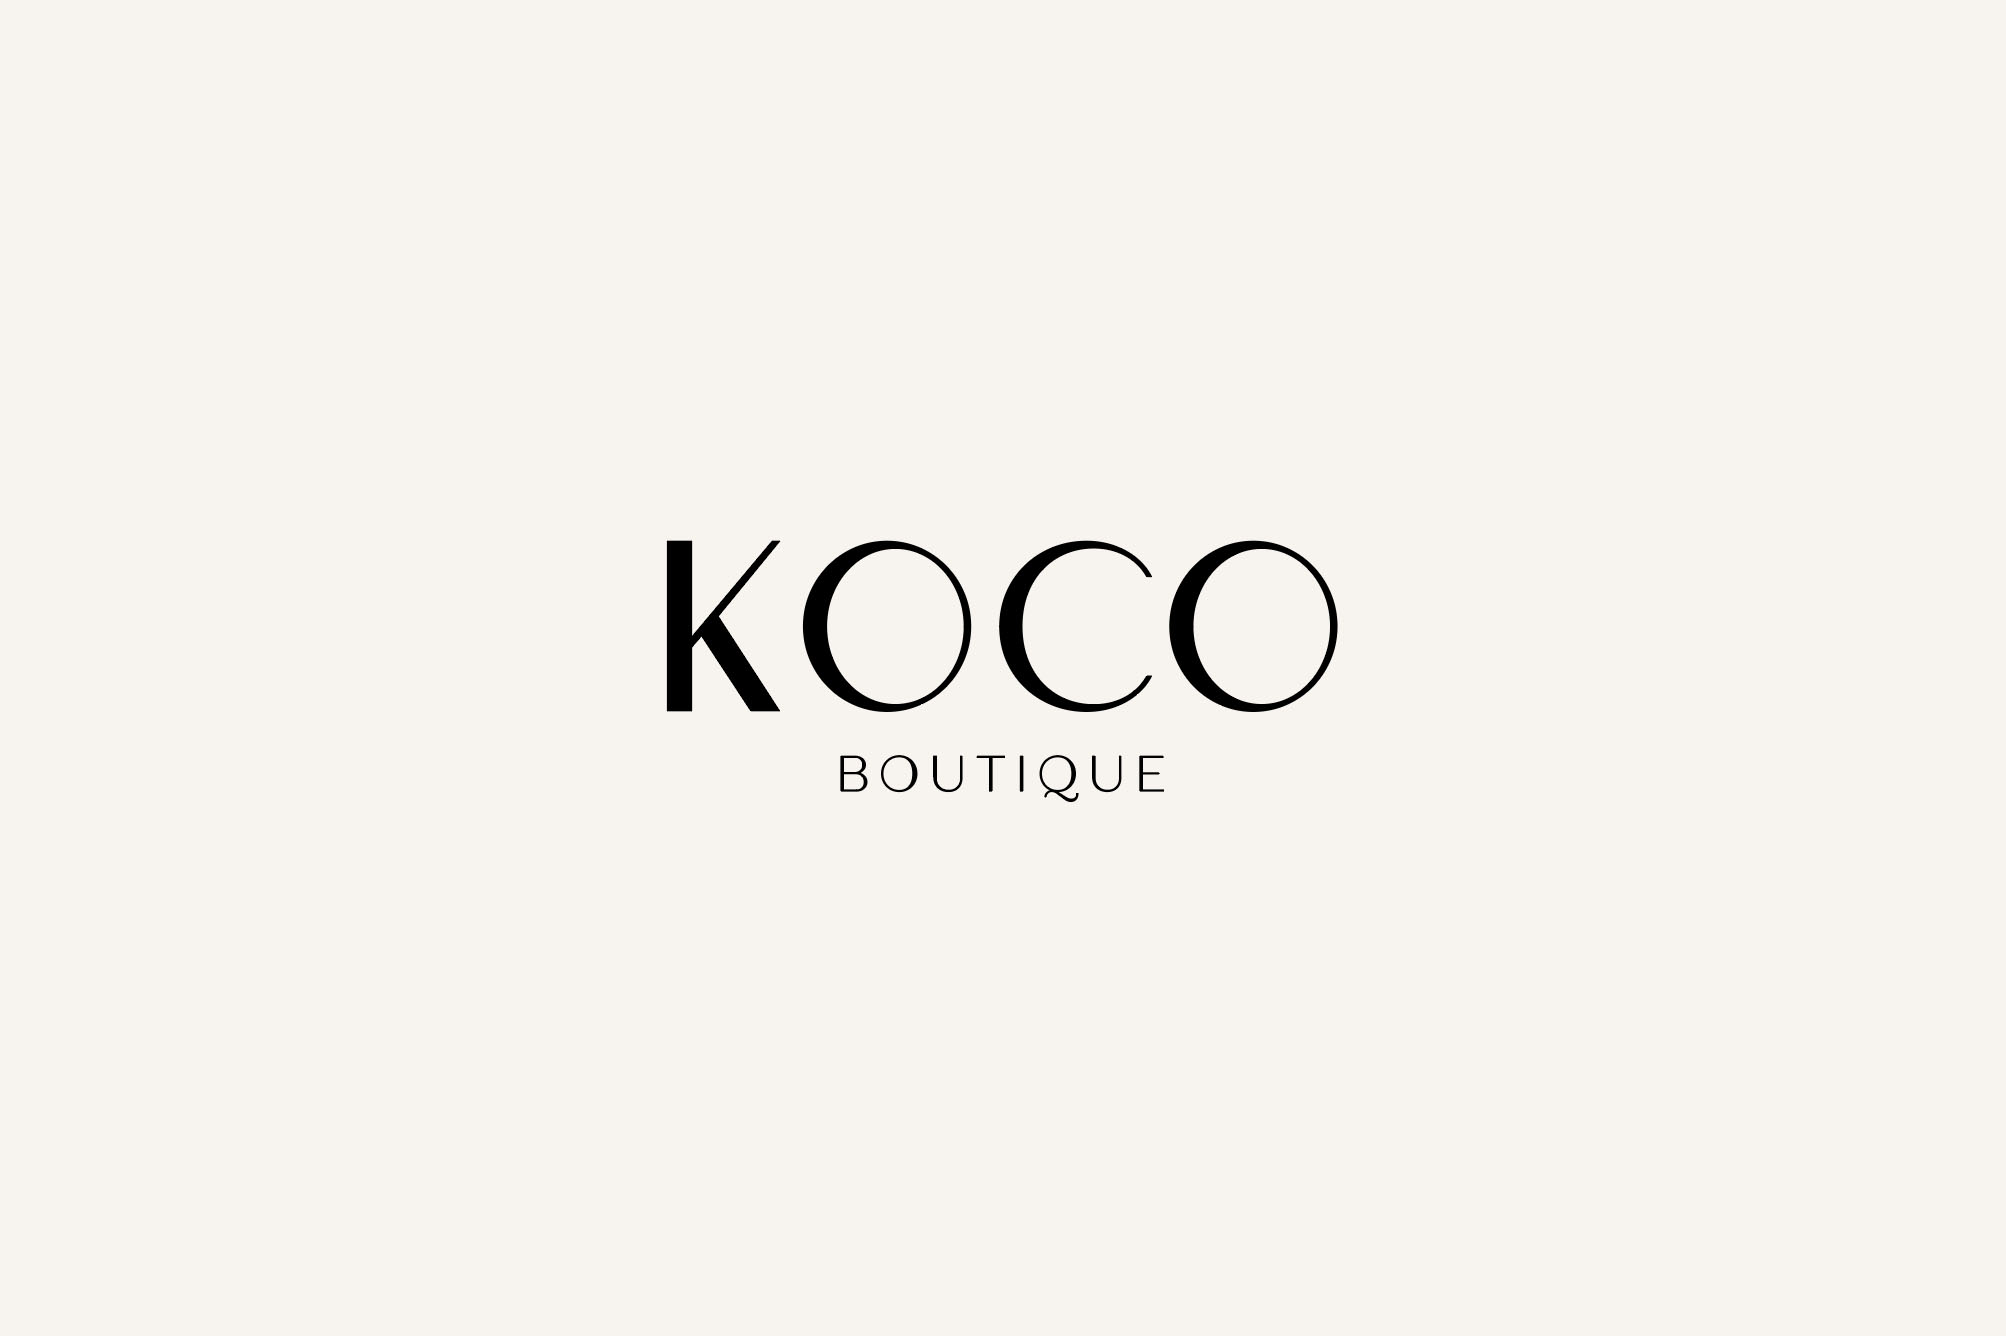 Koco Boutique Brand Refresh & Content